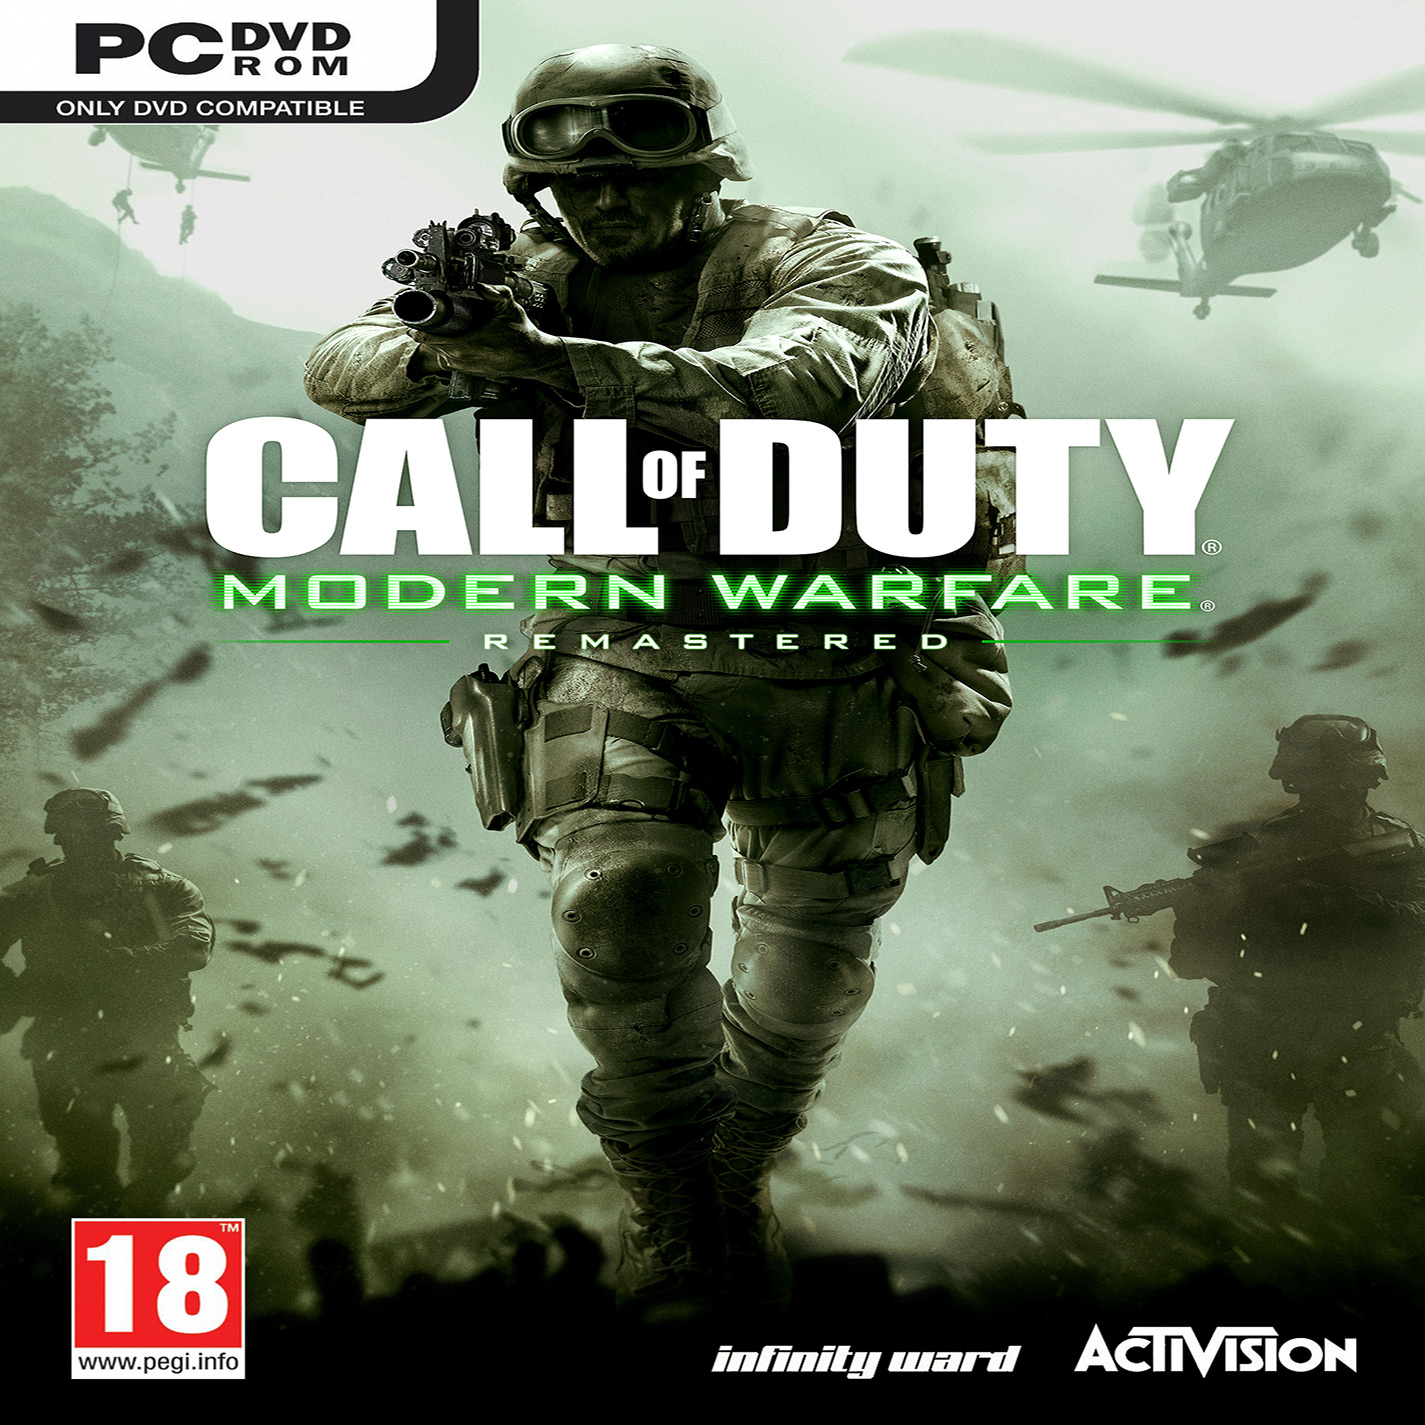 Call of Duty: Modern Warfare Remastered - pedn CD obal